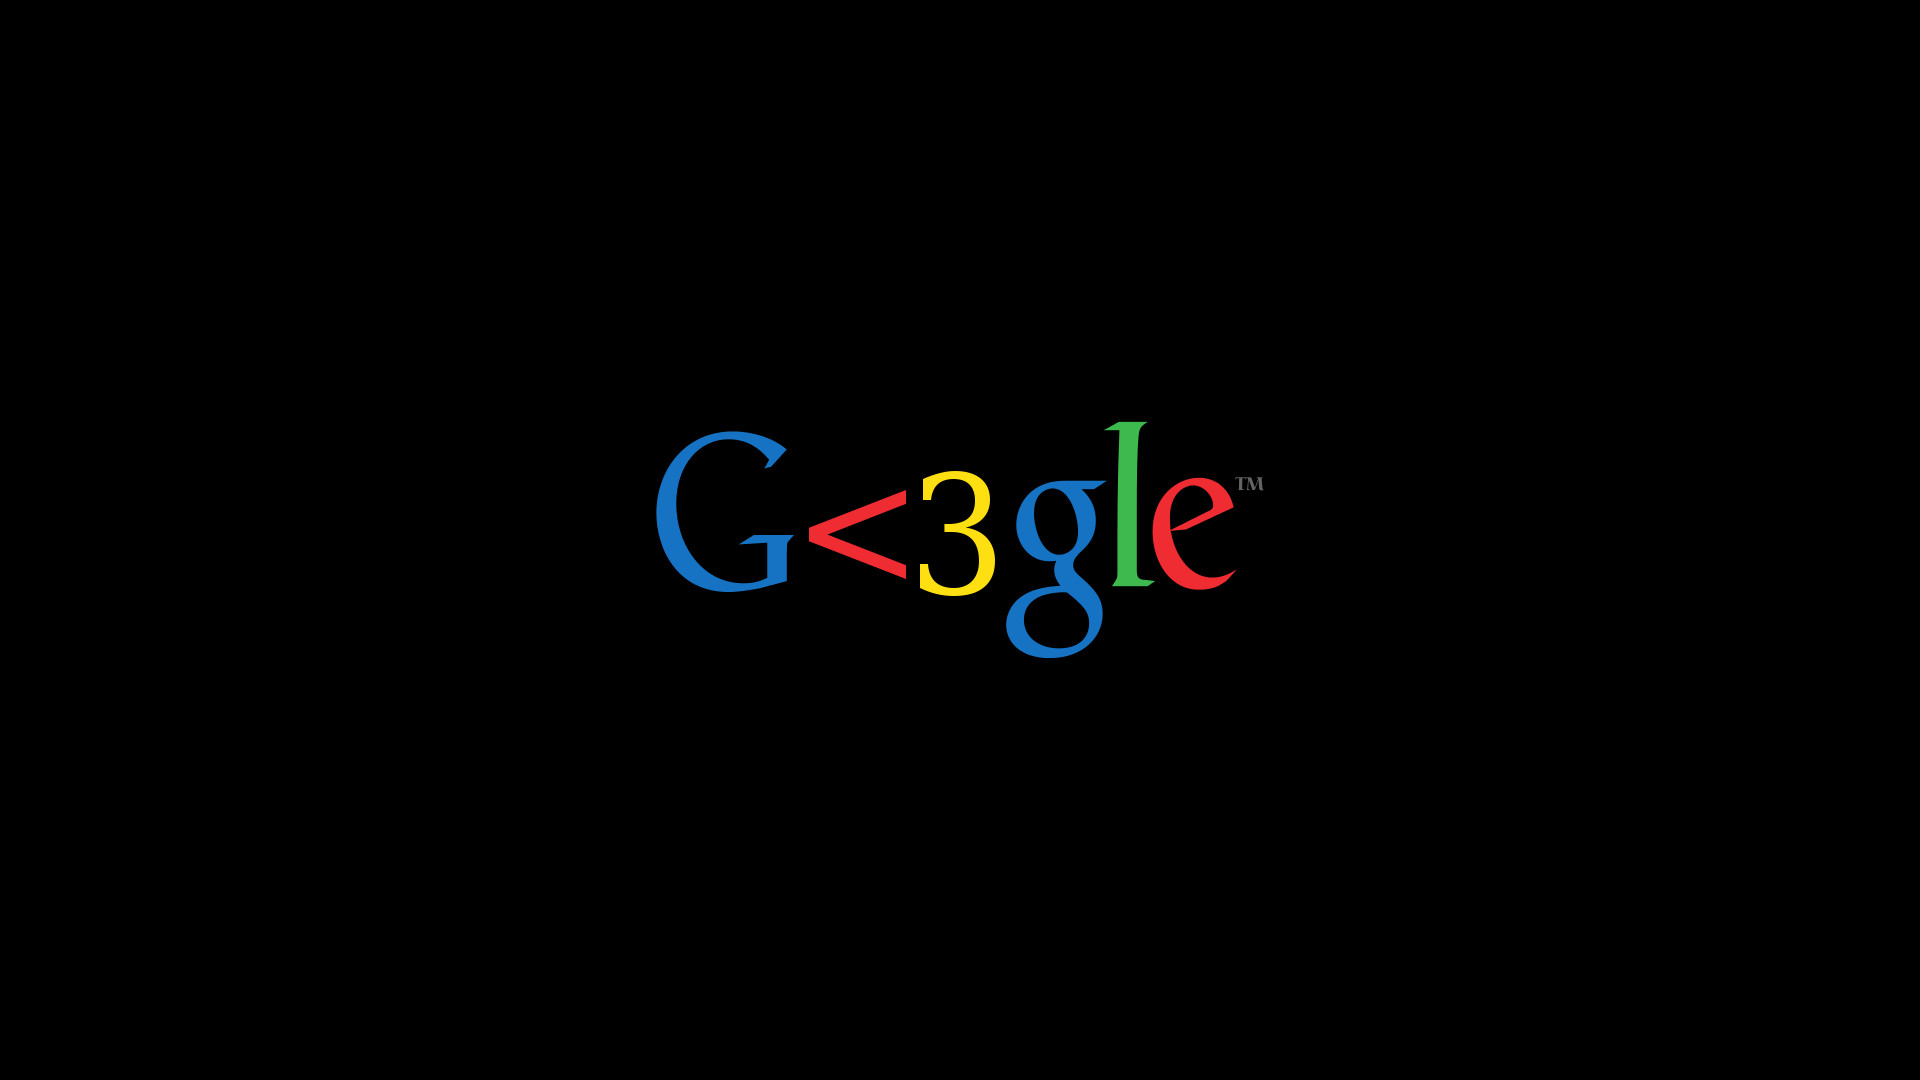 Google Wallpaper And Screensavers Image